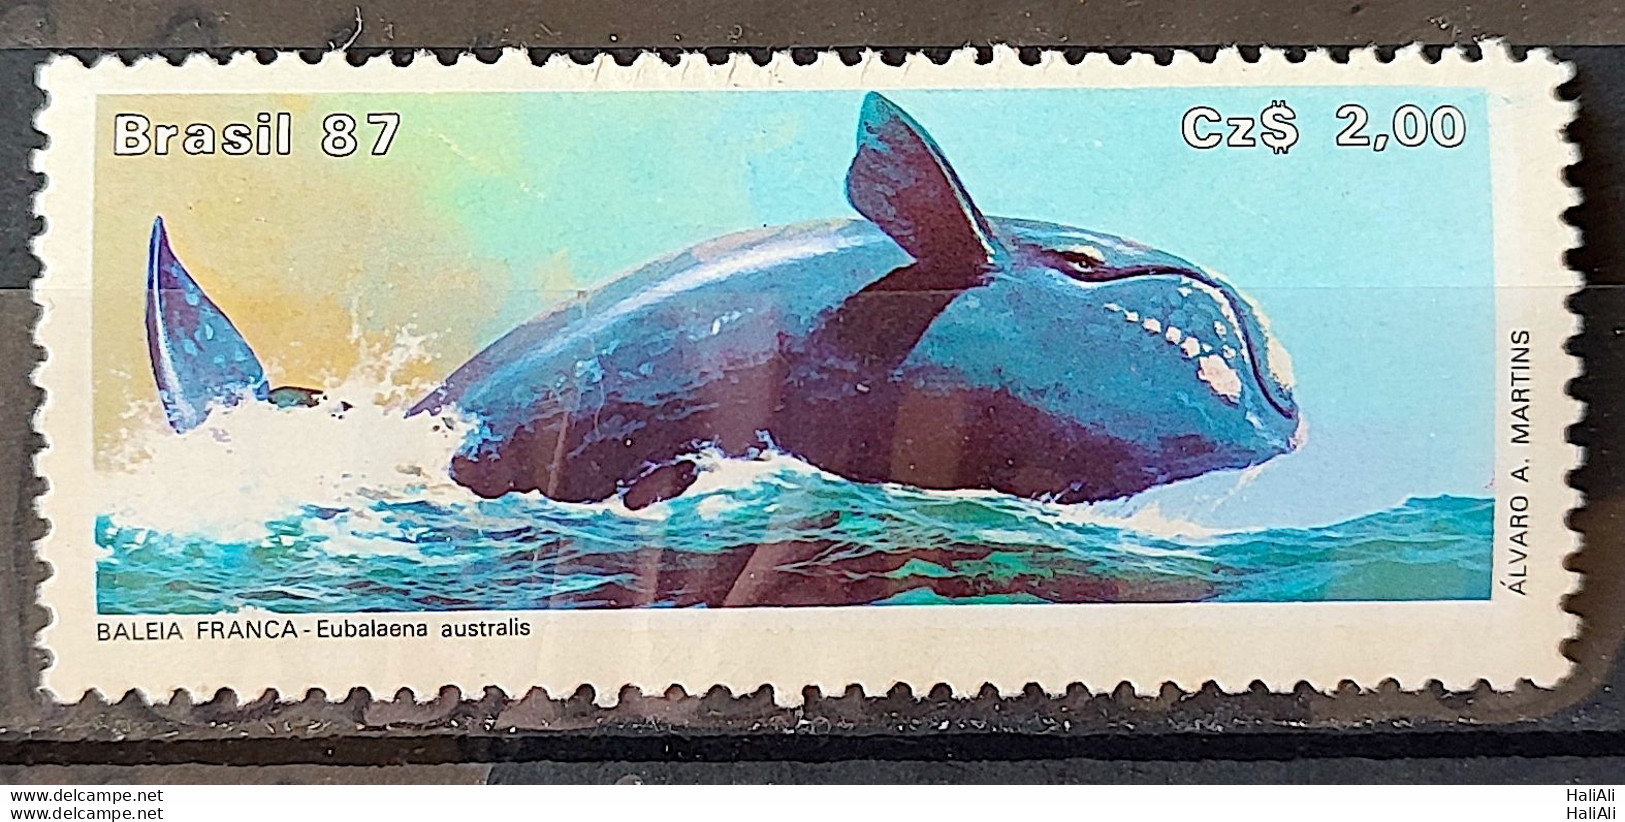 C 1550 Brazil Stamp Brazilian Fauna Whale Frank 1987 1 - Unused Stamps